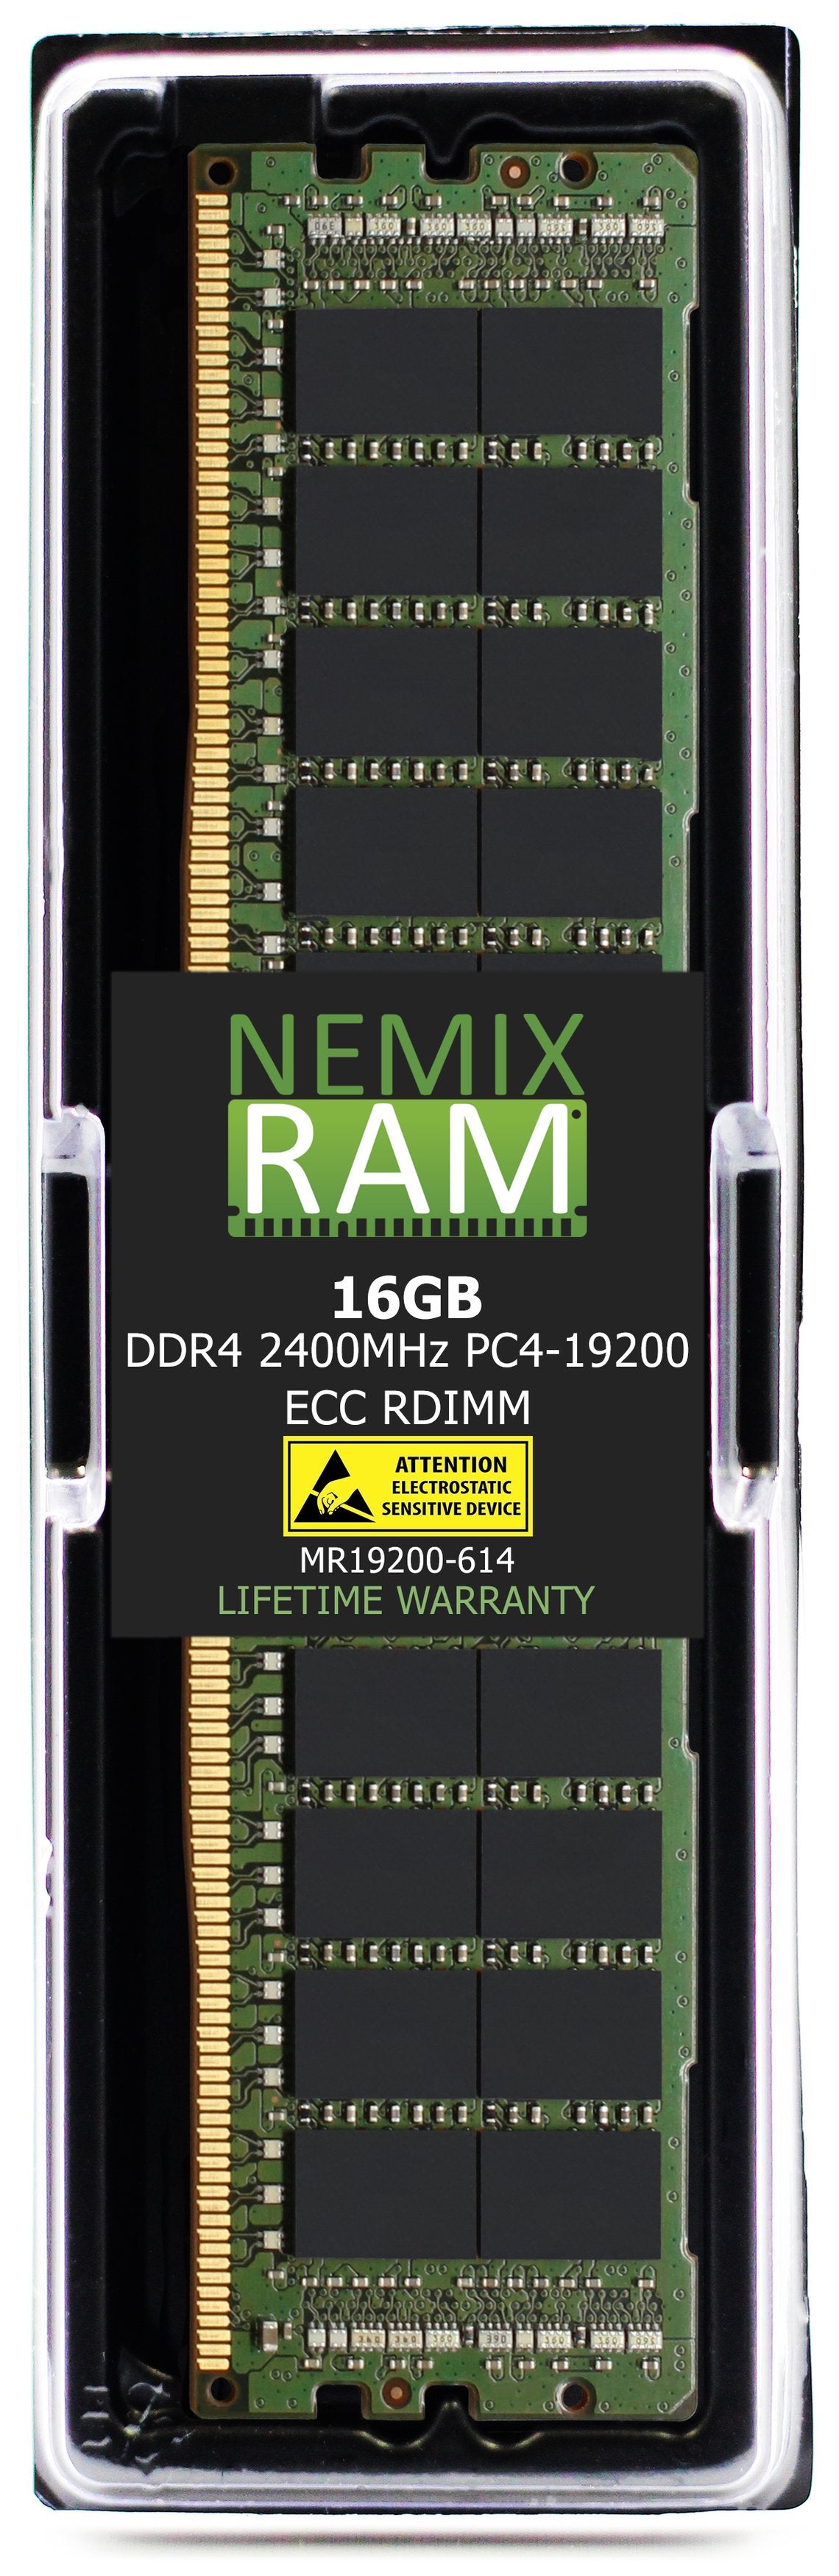 16GB DDR4 2400MHZ PC4-19200 RDIMM Compatible with Supermicro MEM-DR416L-SL06-ER24